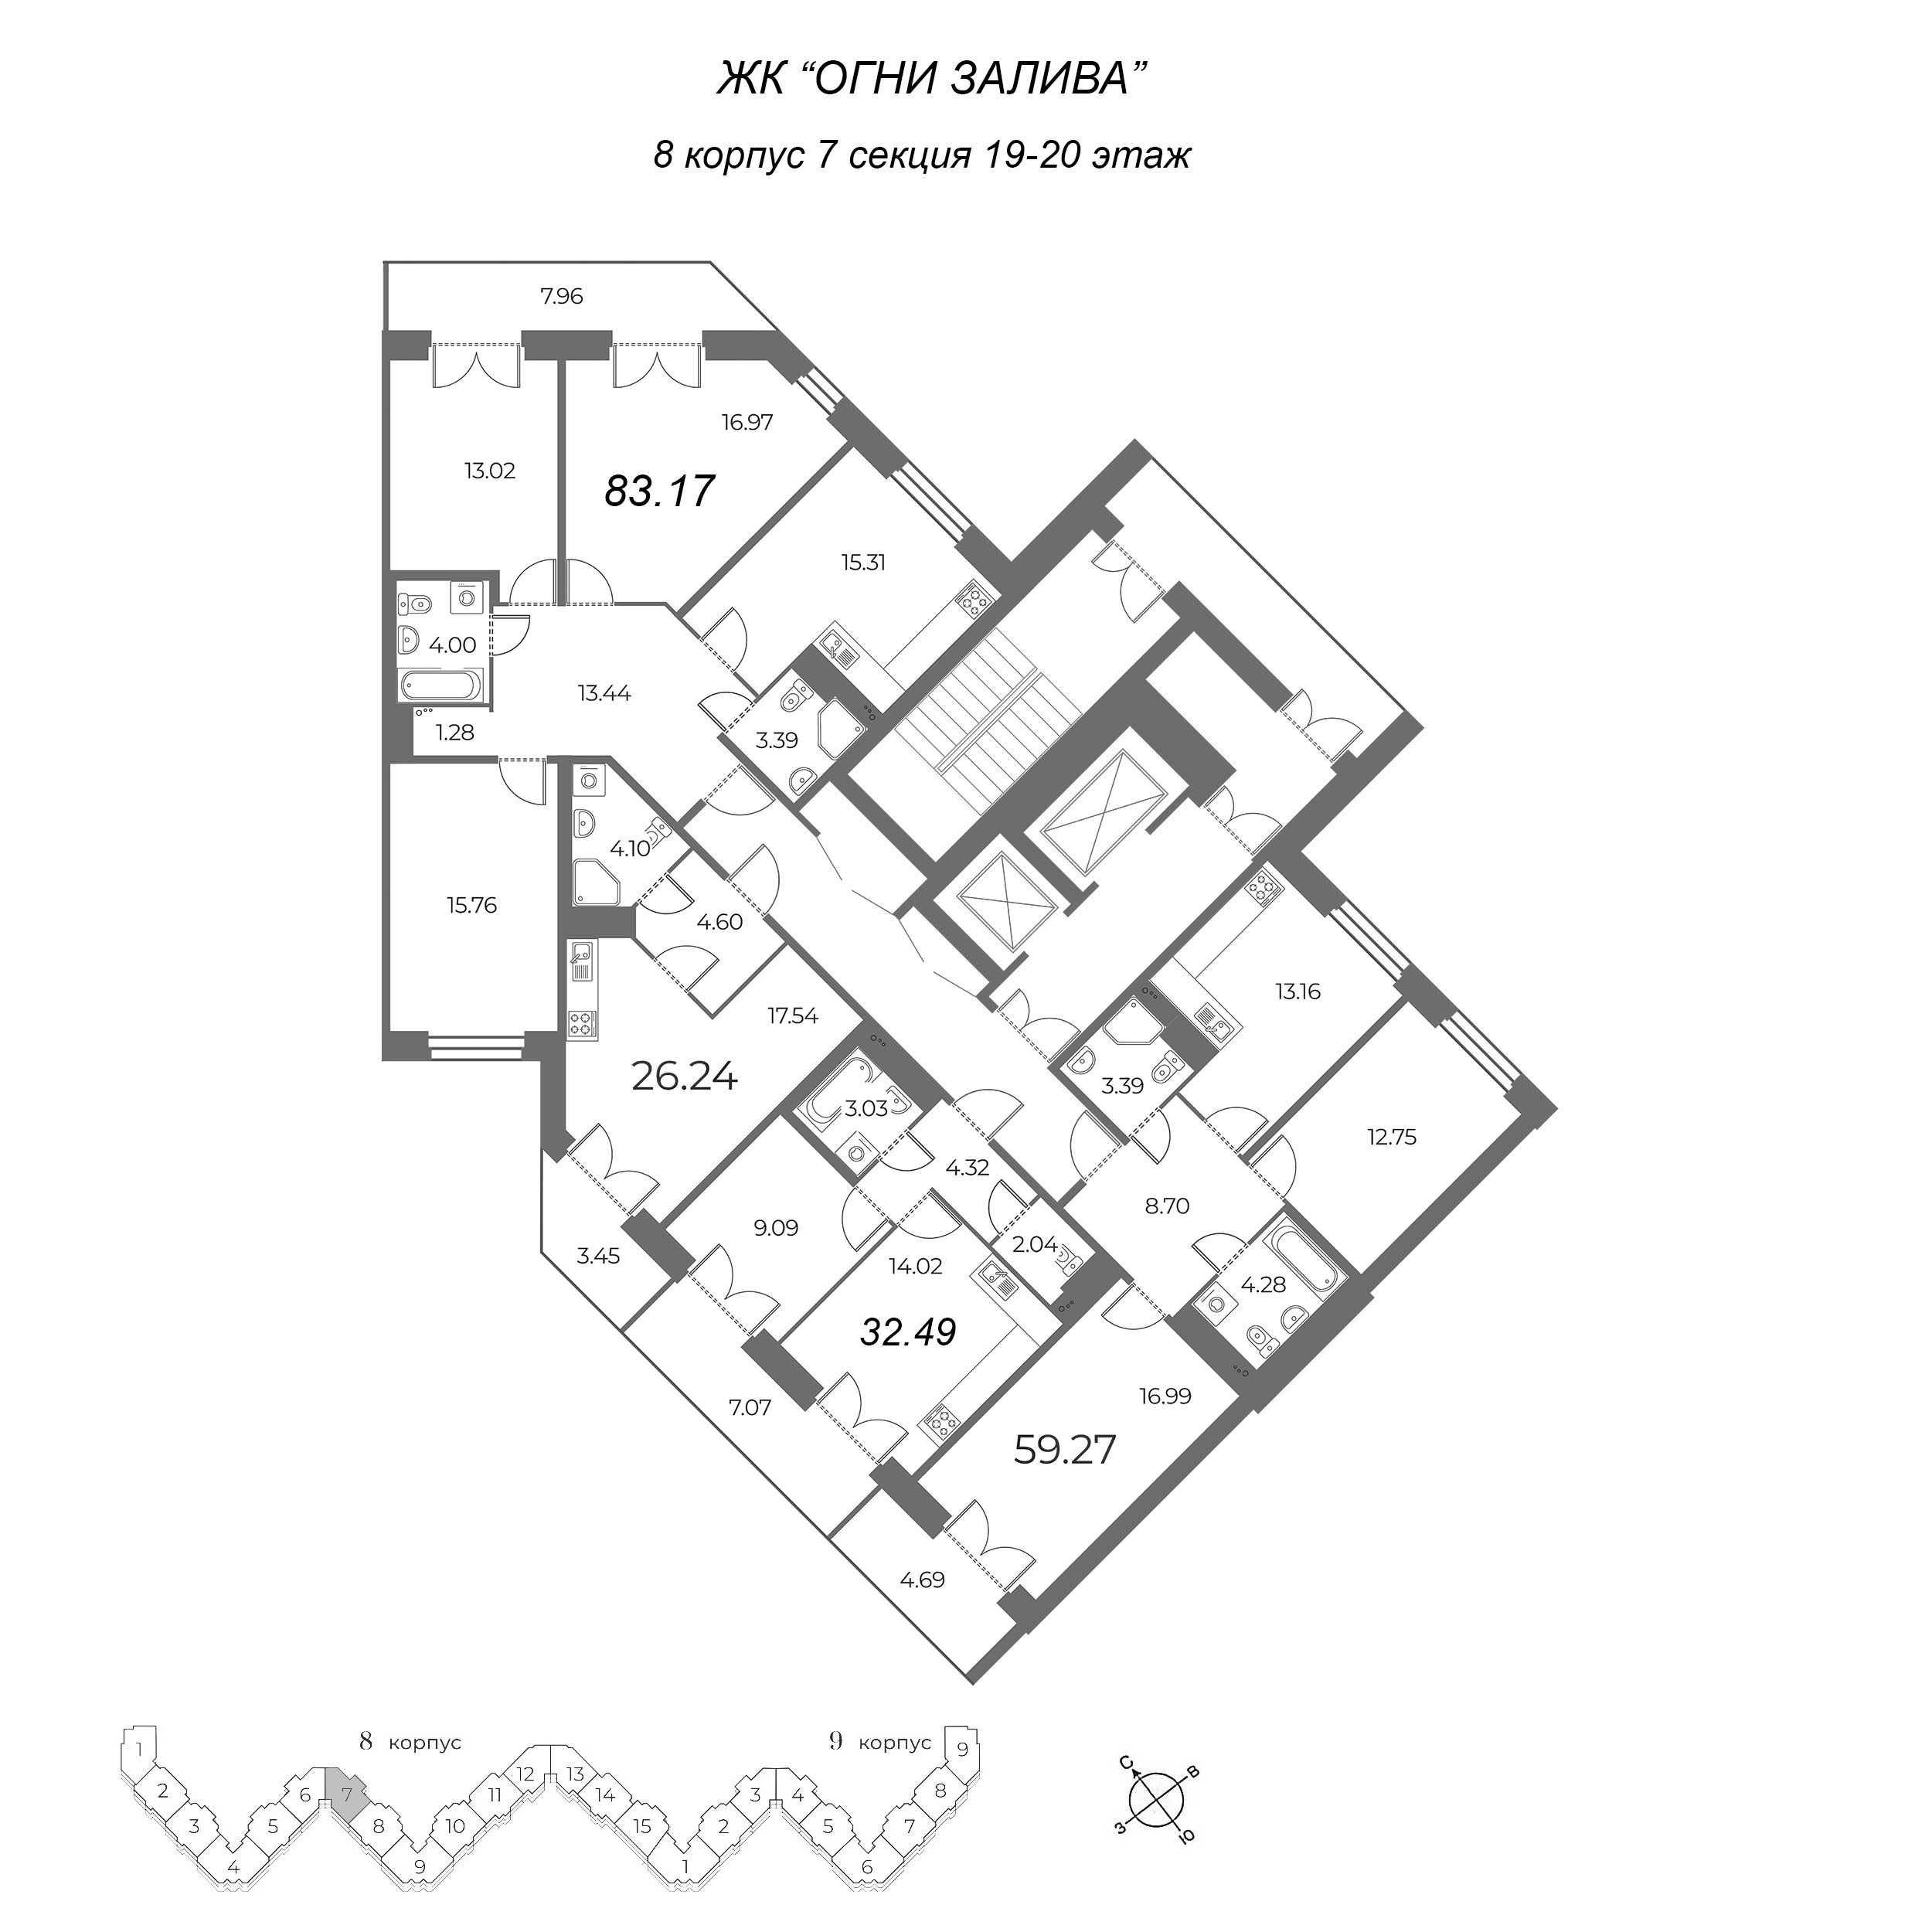 4-комнатная (Евро) квартира, 85.56 м² - планировка этажа